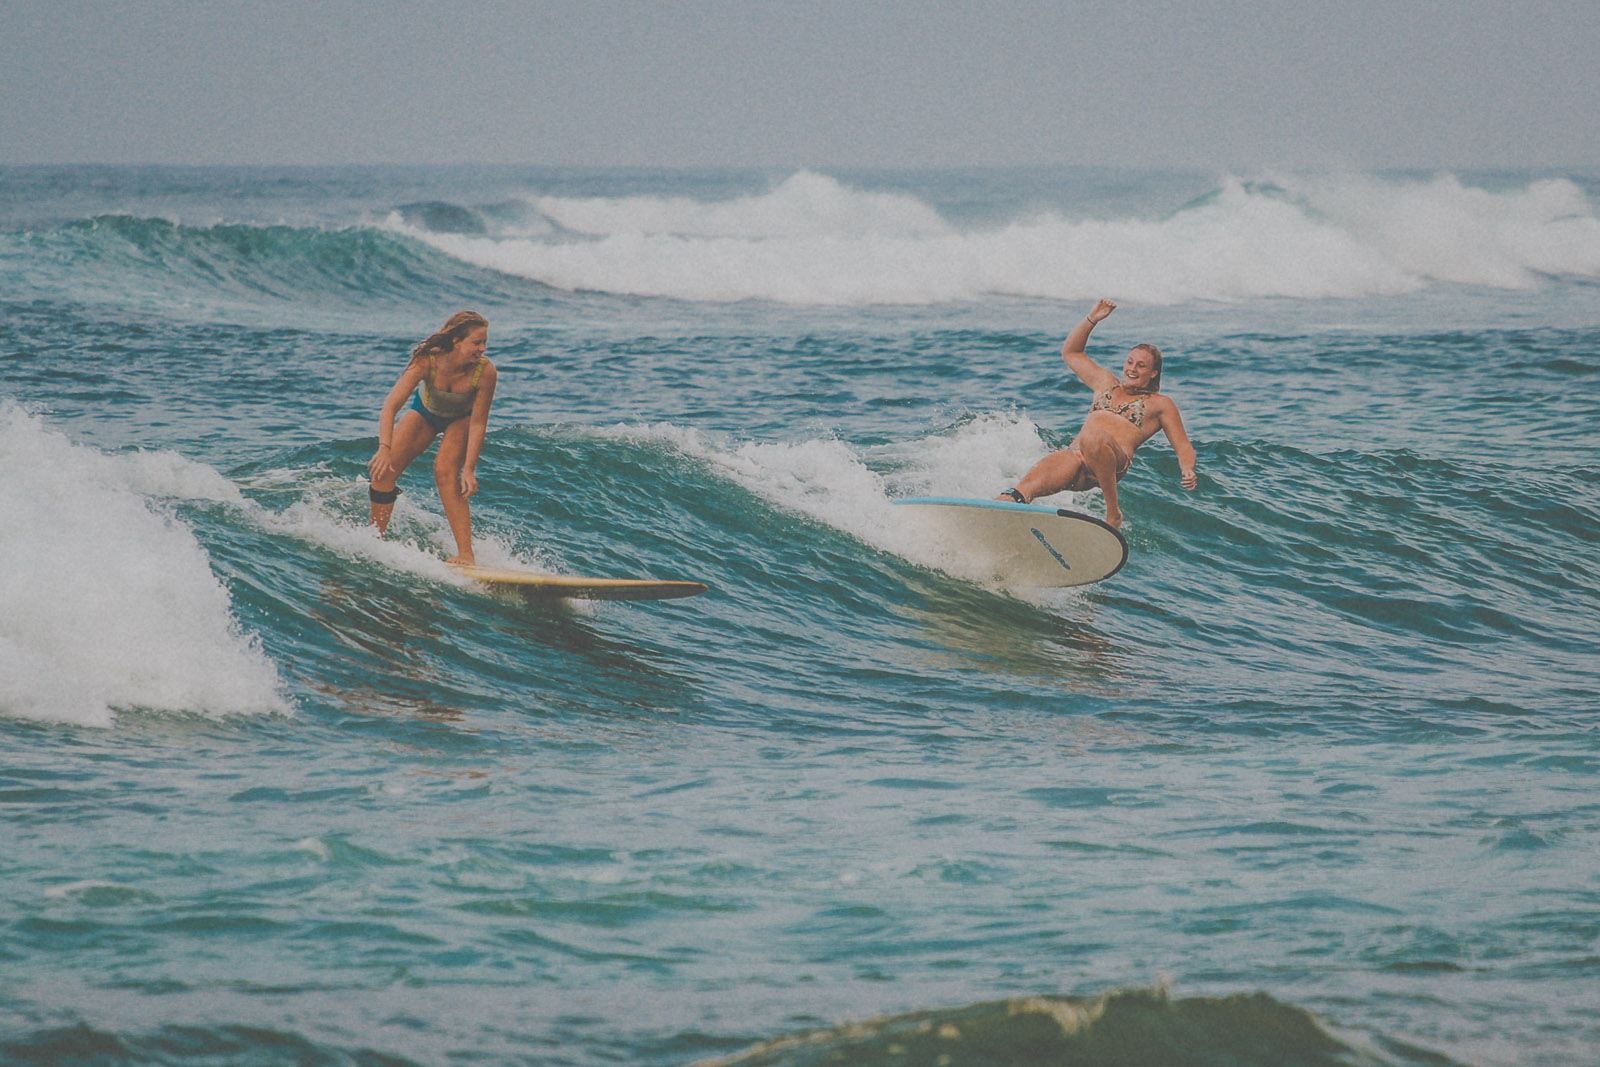 Sri Lanka-Lazy Left-Rams-Midigama-Surfing-Surf-Wave-Pointbreak-Longboard-Sunshinestories-IMG_4197